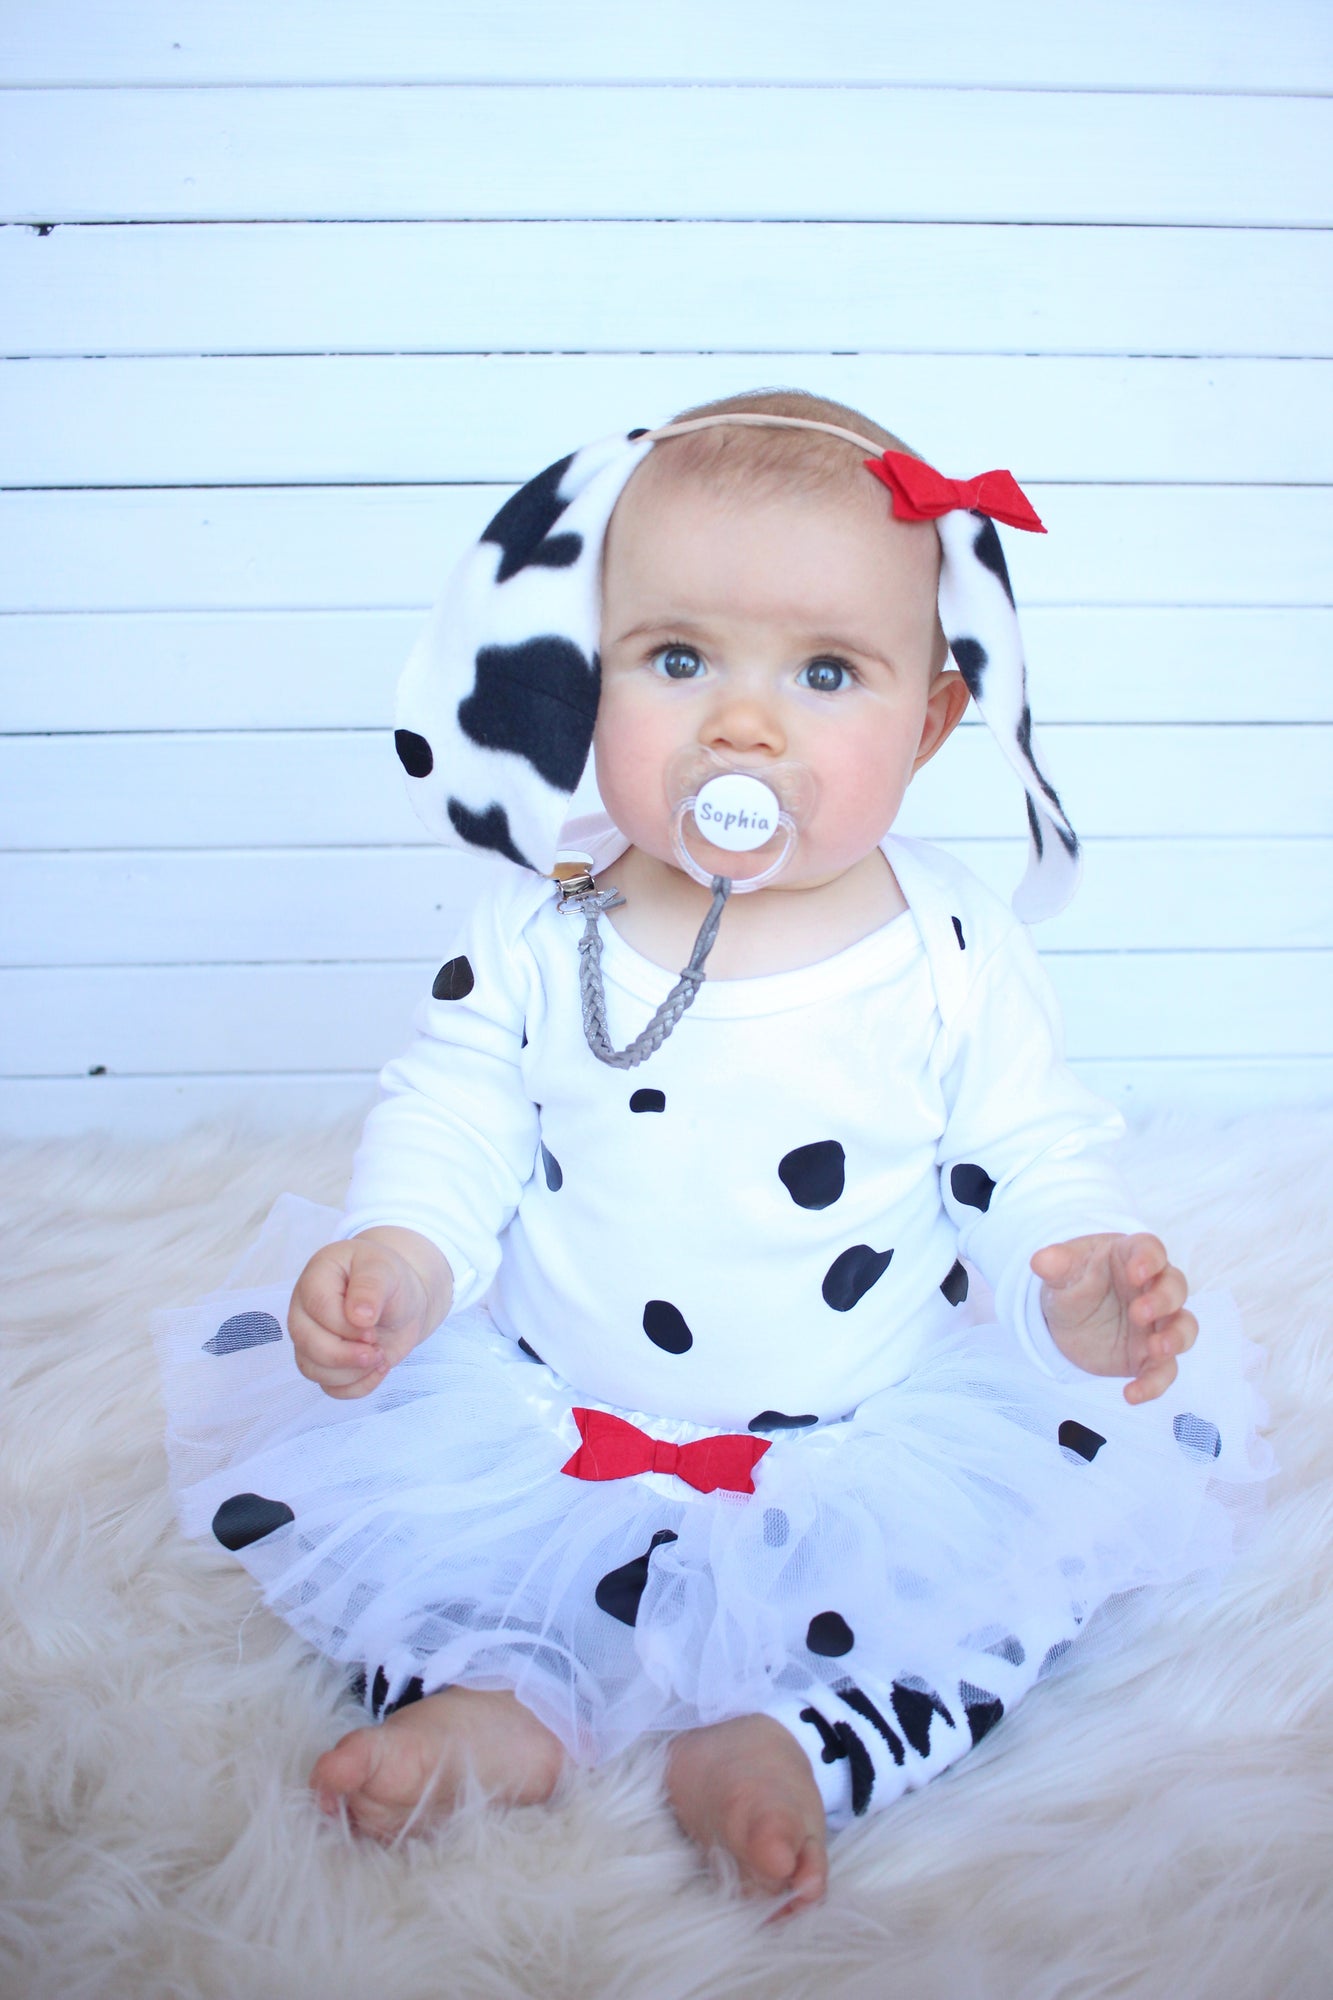 infant dalmatian costume